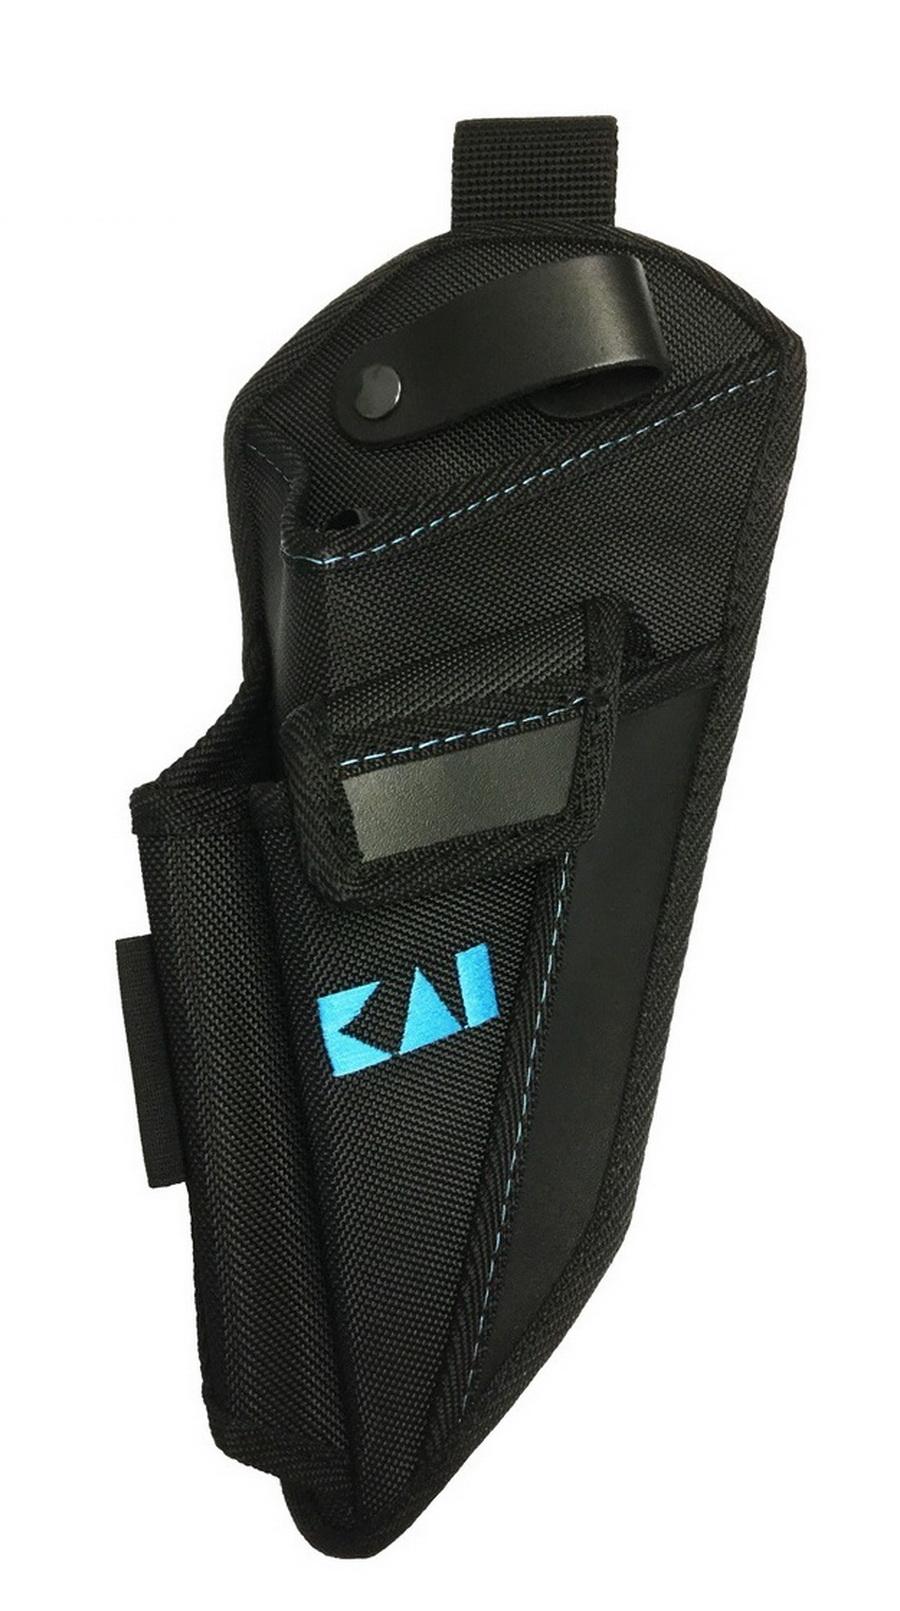 KAI Scissor Holster With Adjustable Belt